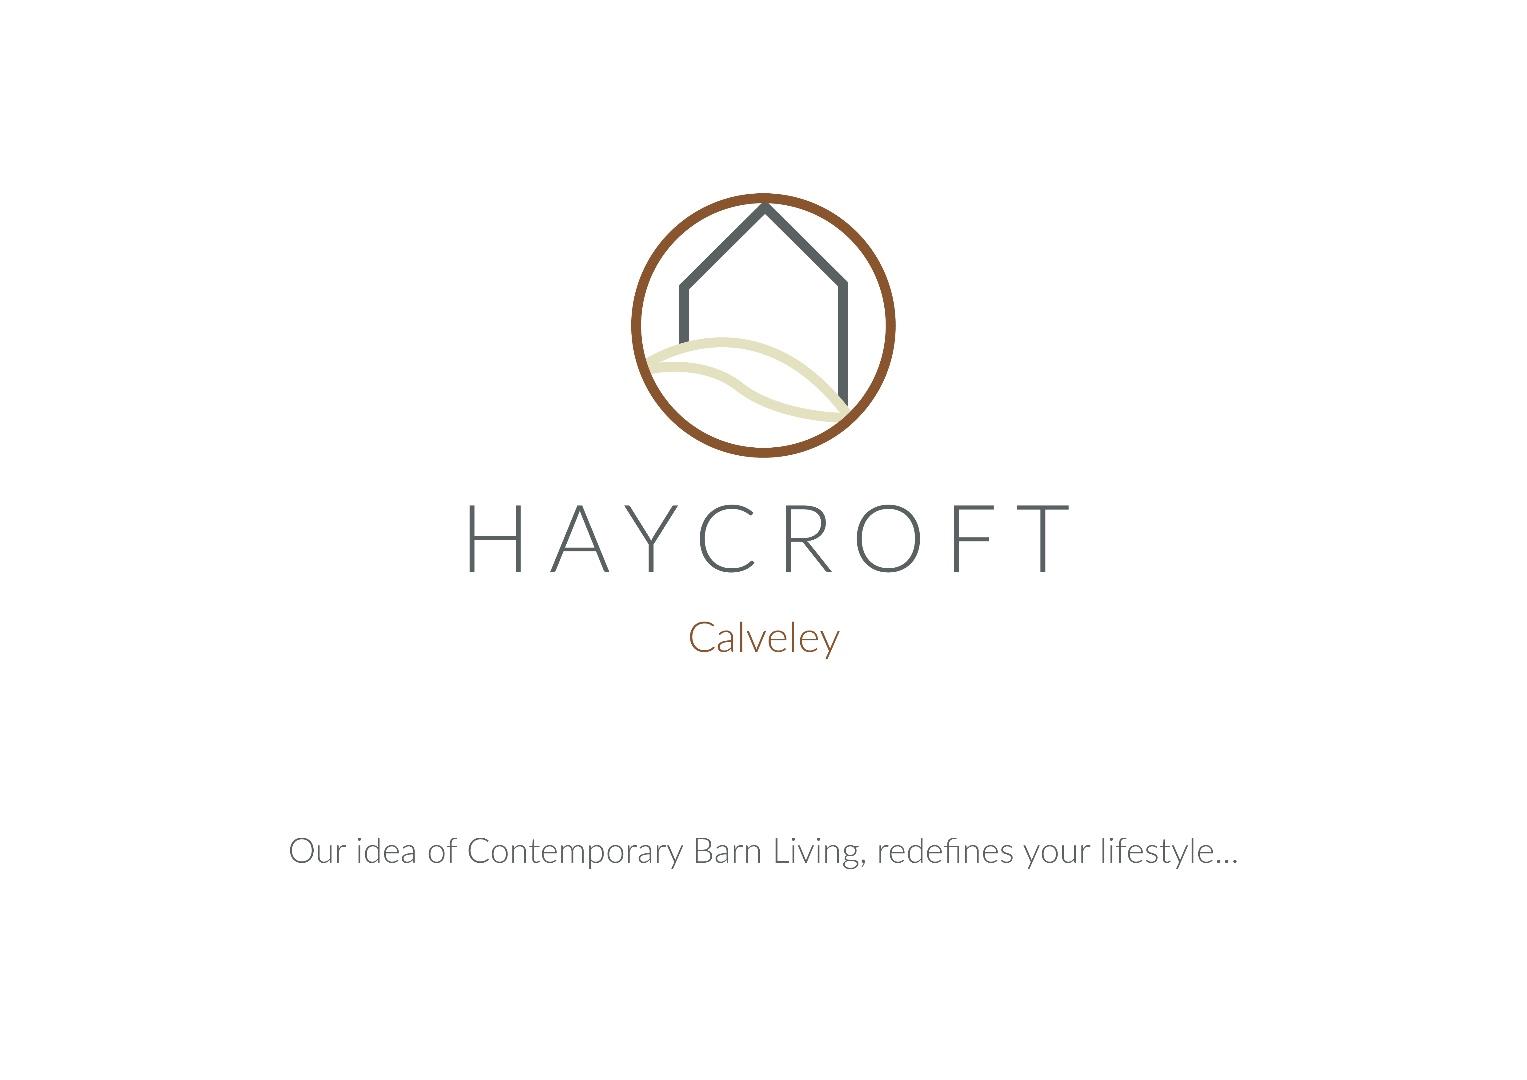 Haycroft - Calveley.jpg